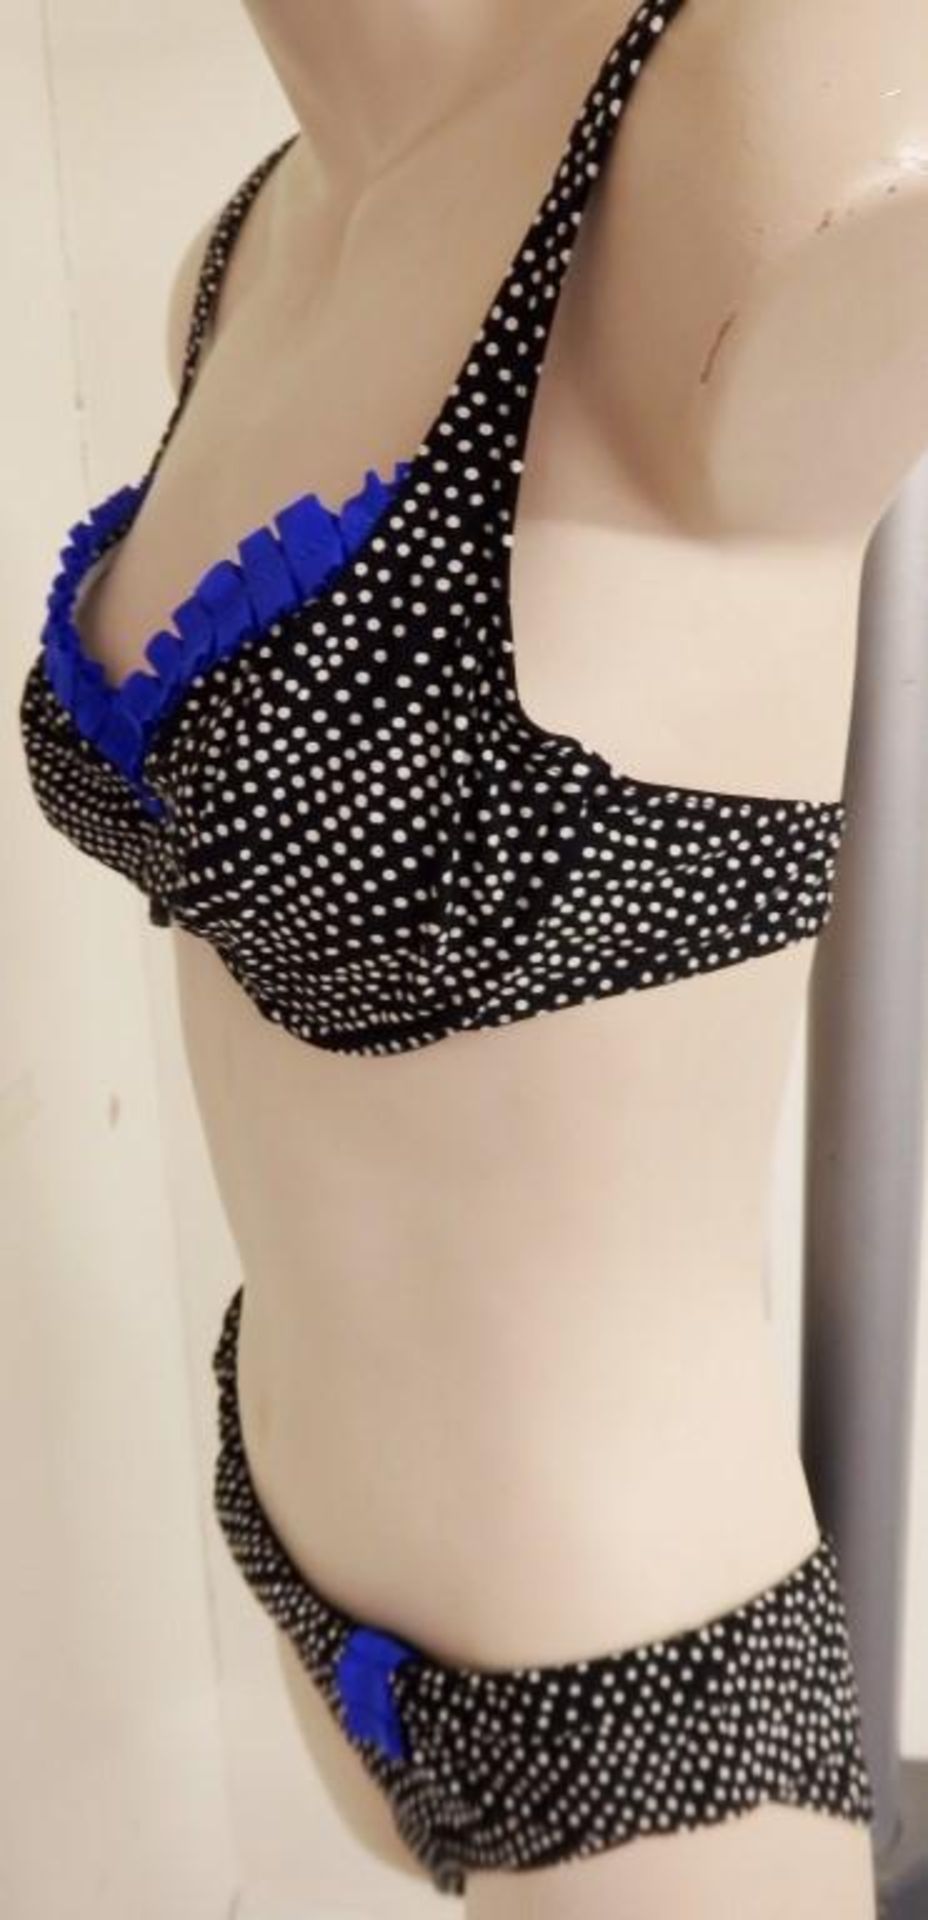 1 x Rasurel - Black Polka dot with royal blue trim &frill Tobago Bikini - B21068 - Size 2C - UK 32 - - Image 5 of 10